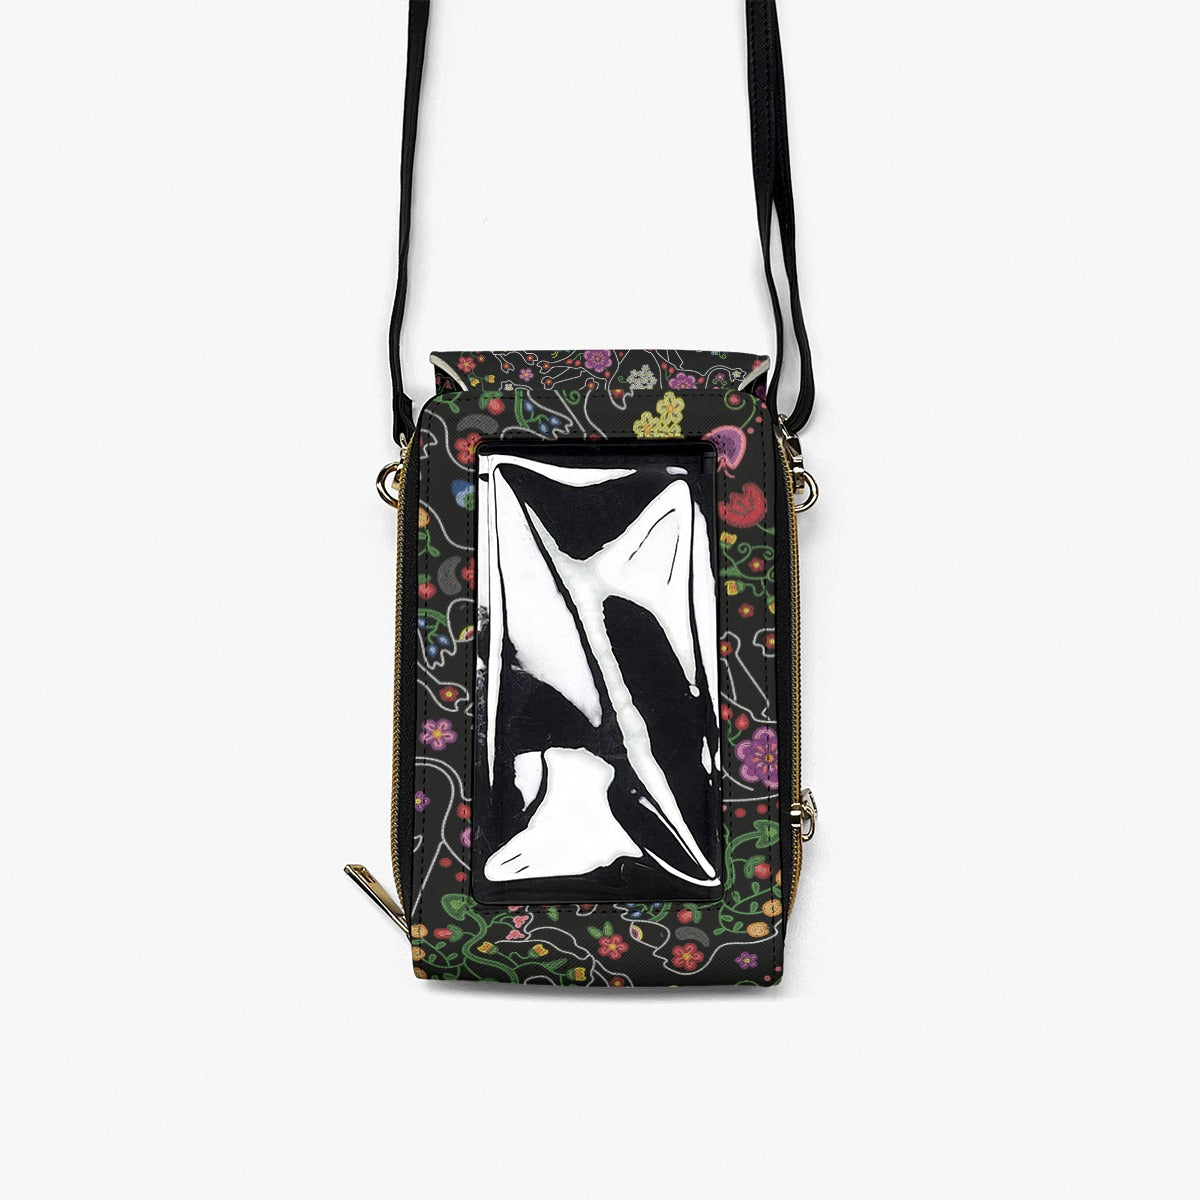 Floral Ledger Sweathearts Mobile Phone Chest Bag